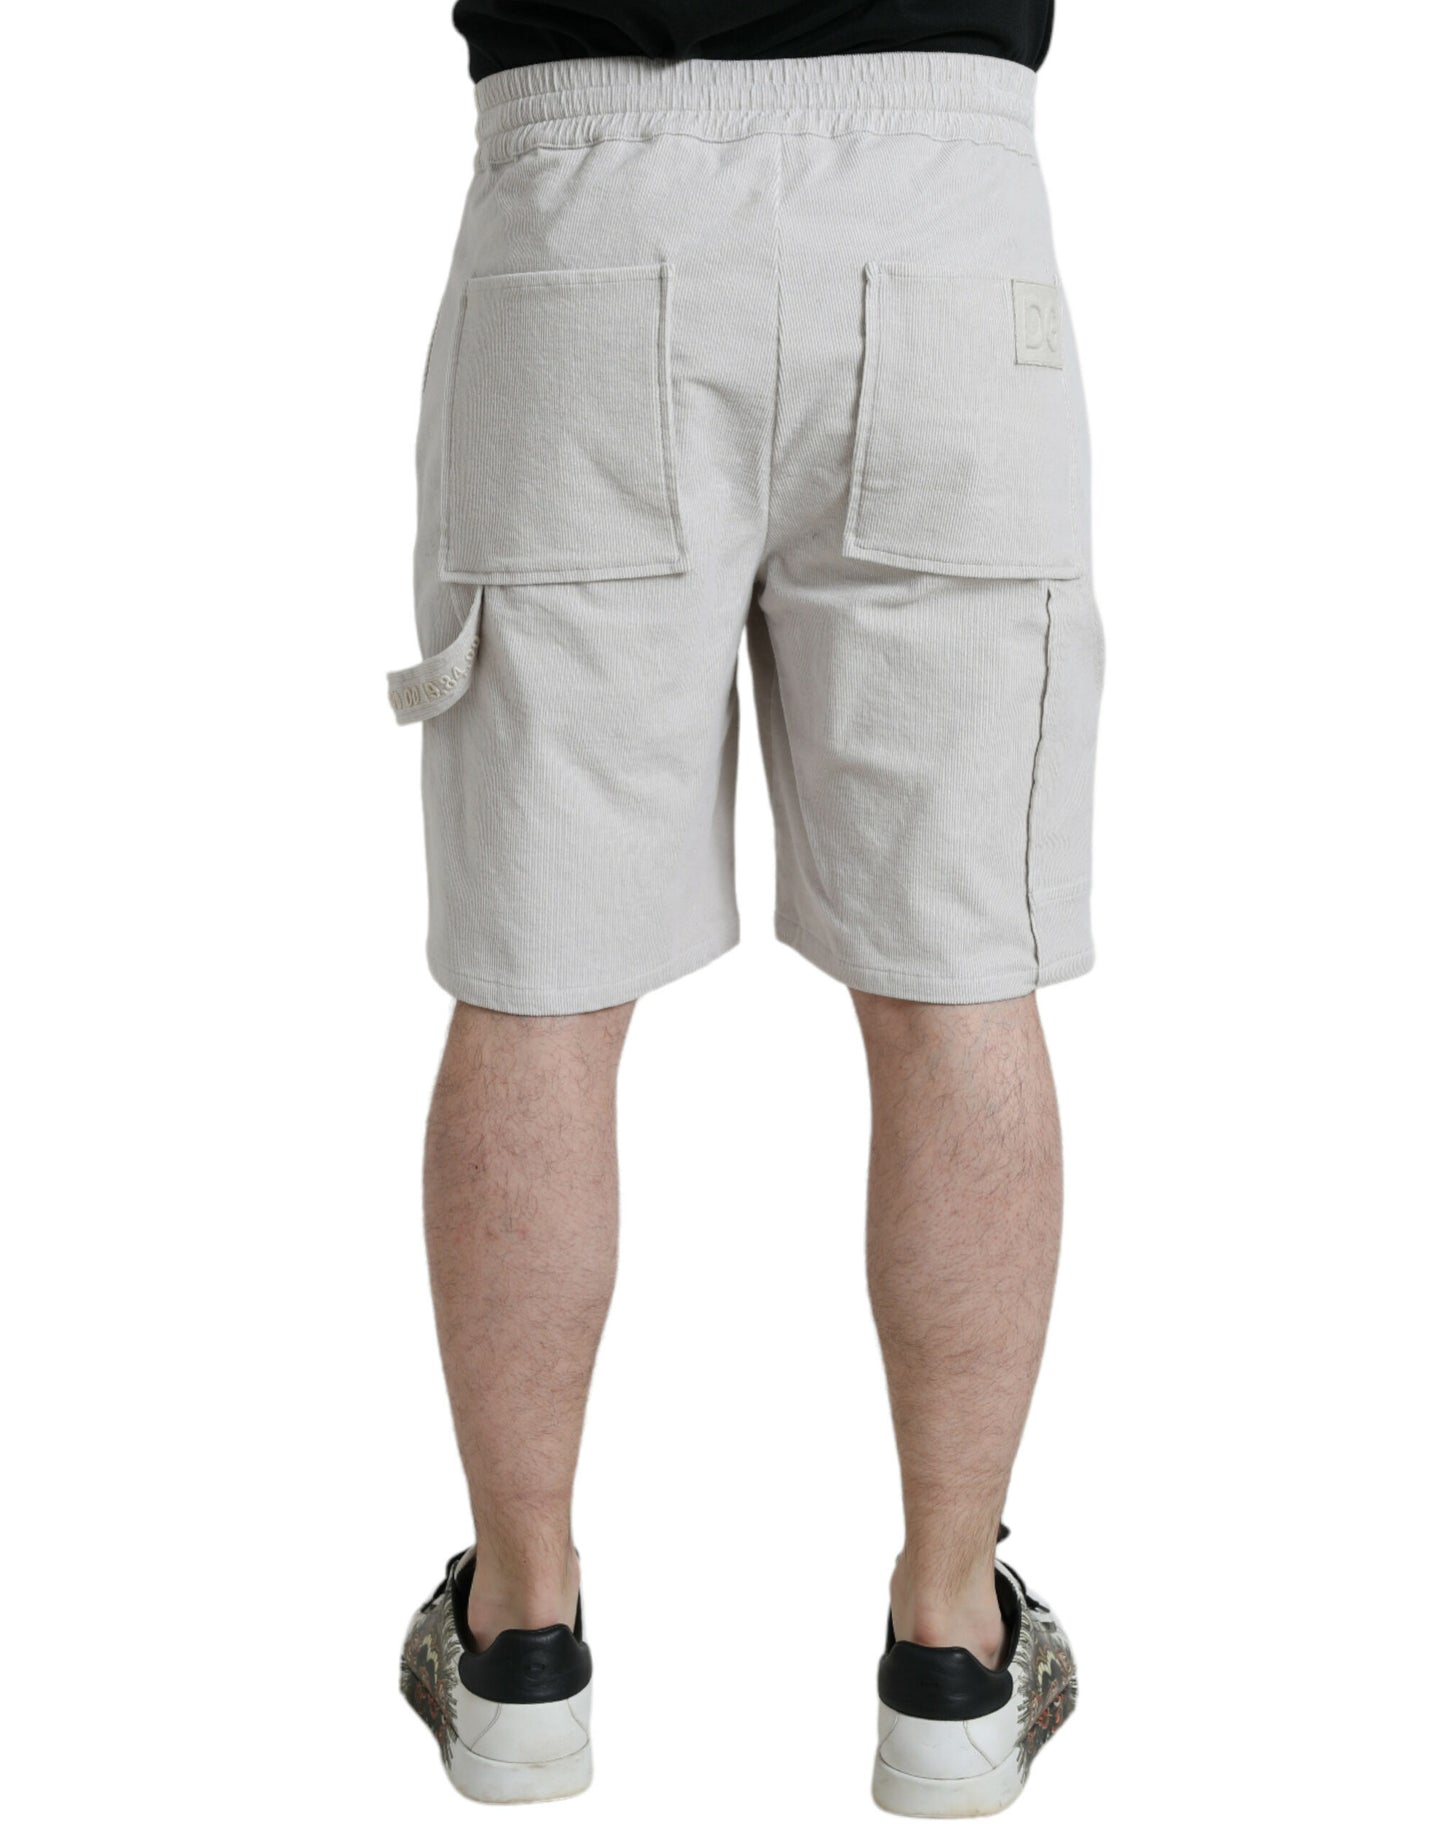 Beige Cotton Corduroy Men's Bermuda Shorts